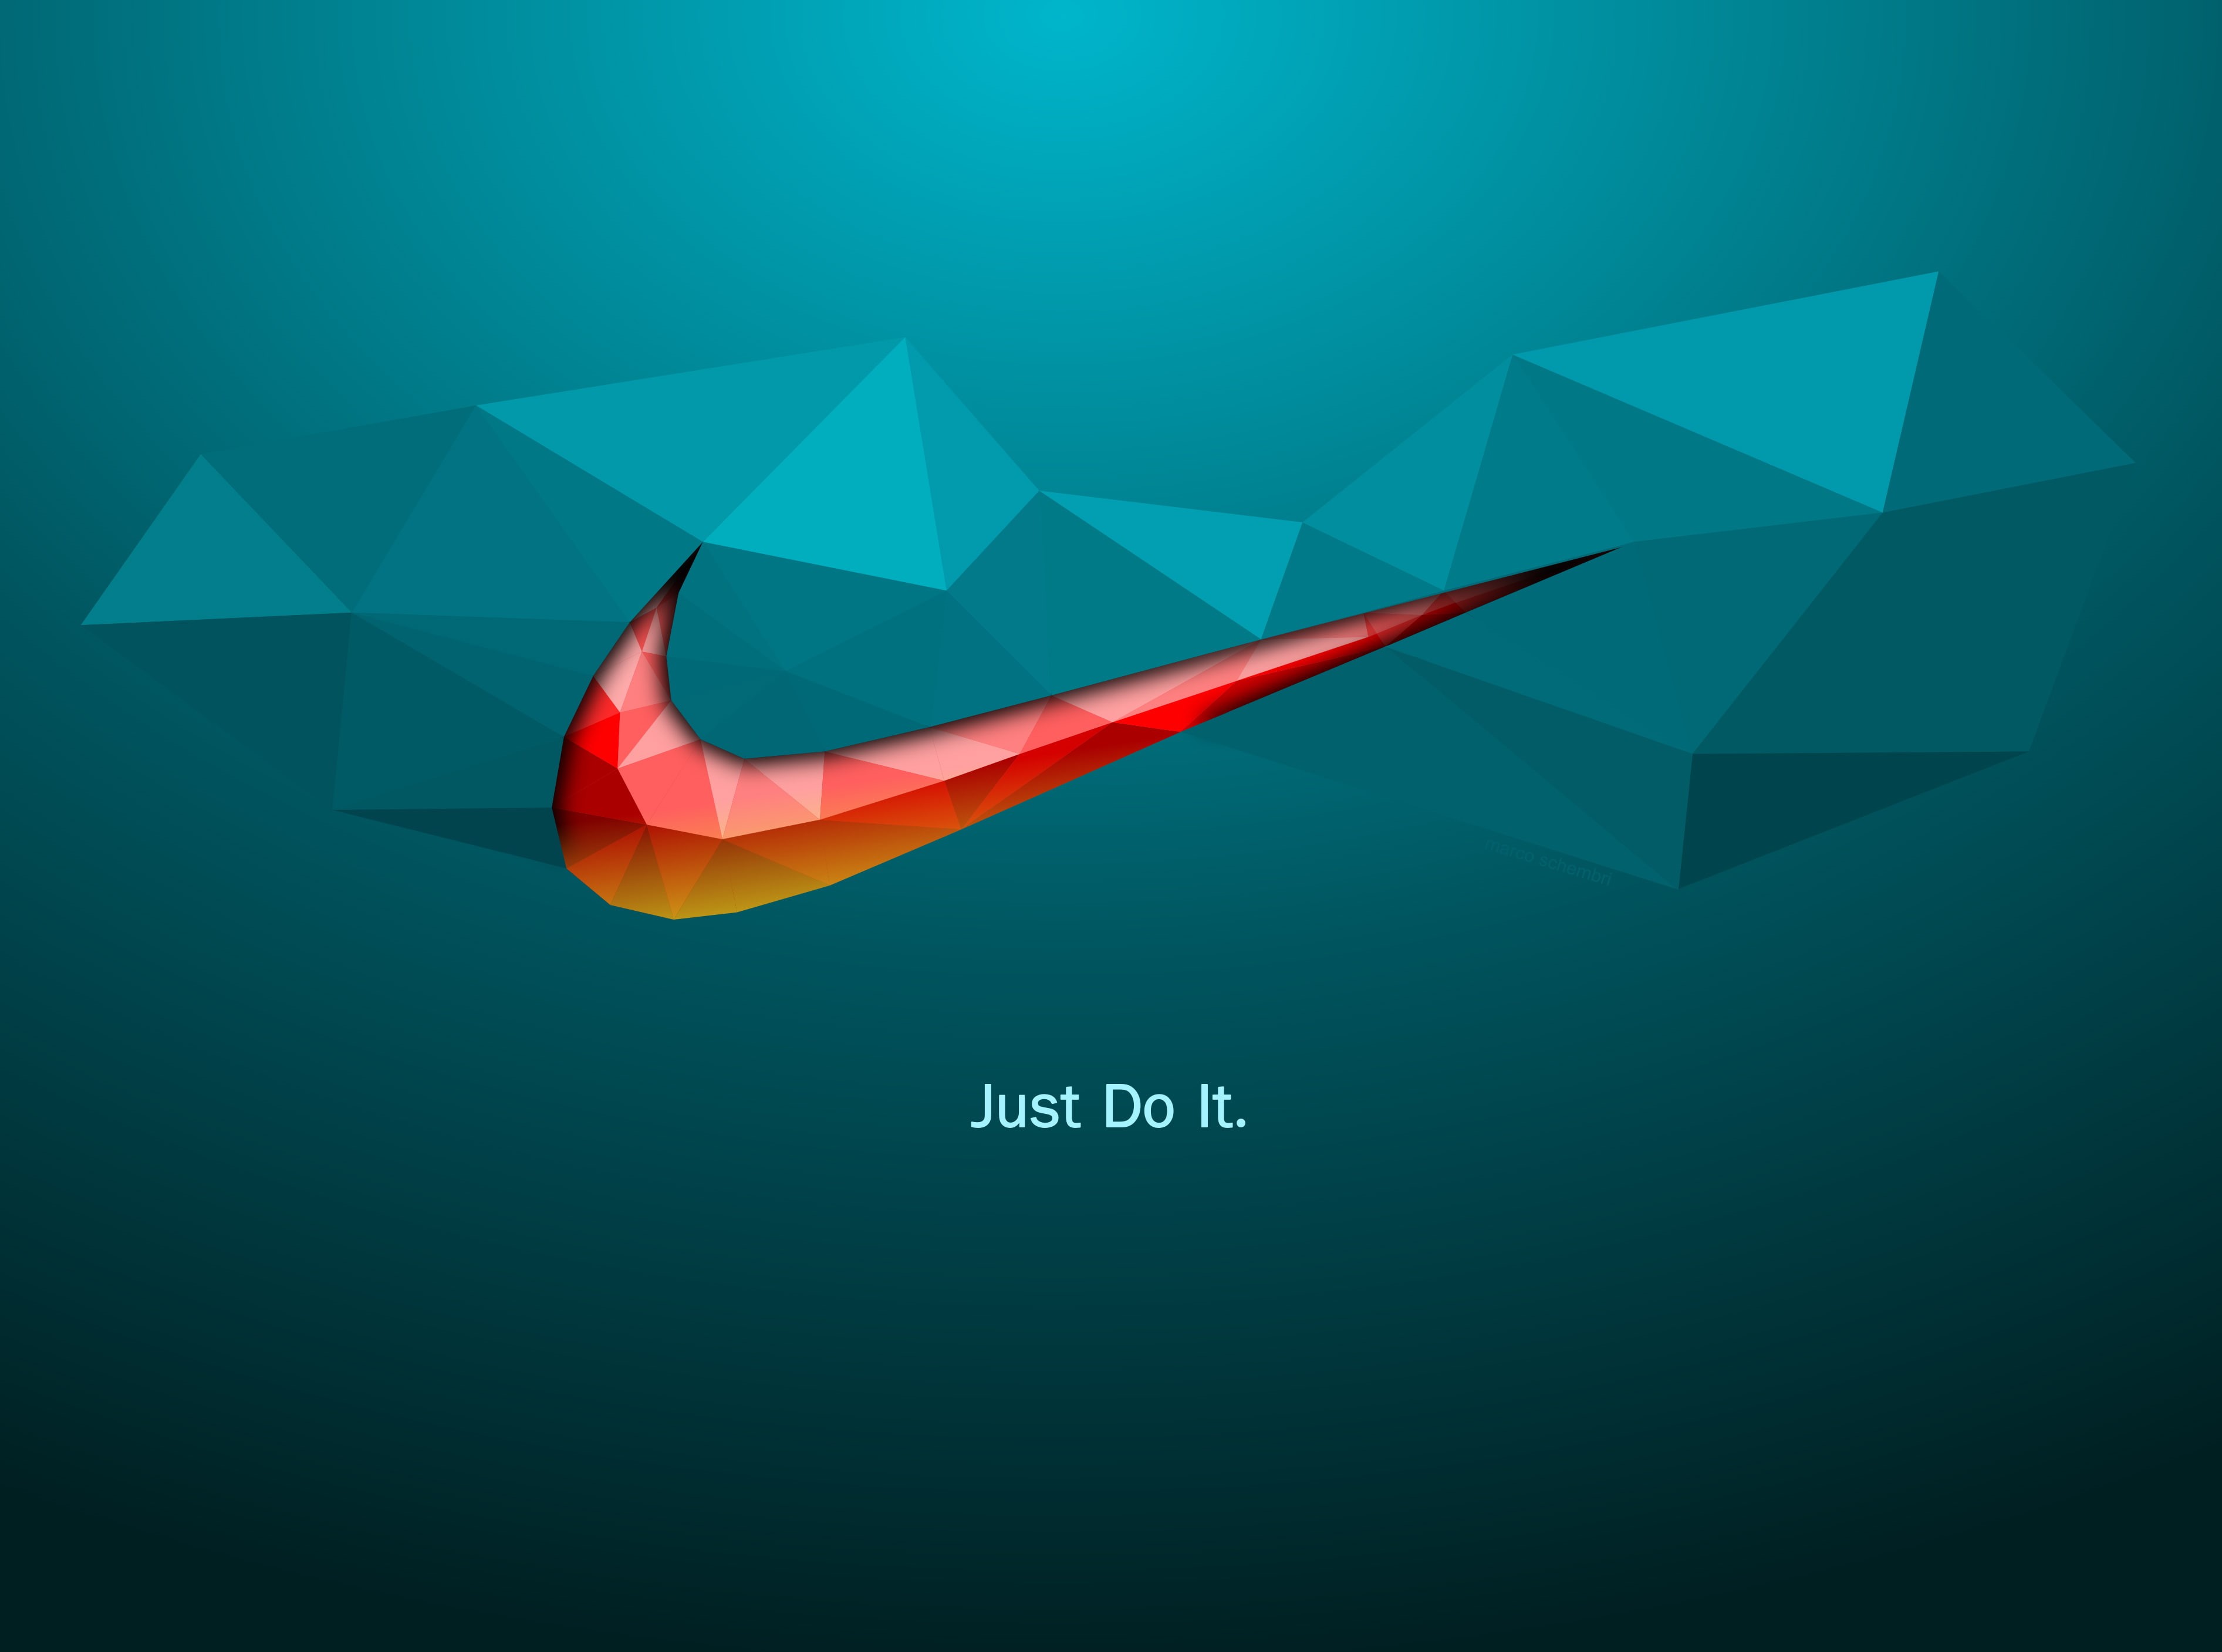 Download wallpapers 4k, Nike logo, creative, blue sky backgrounds